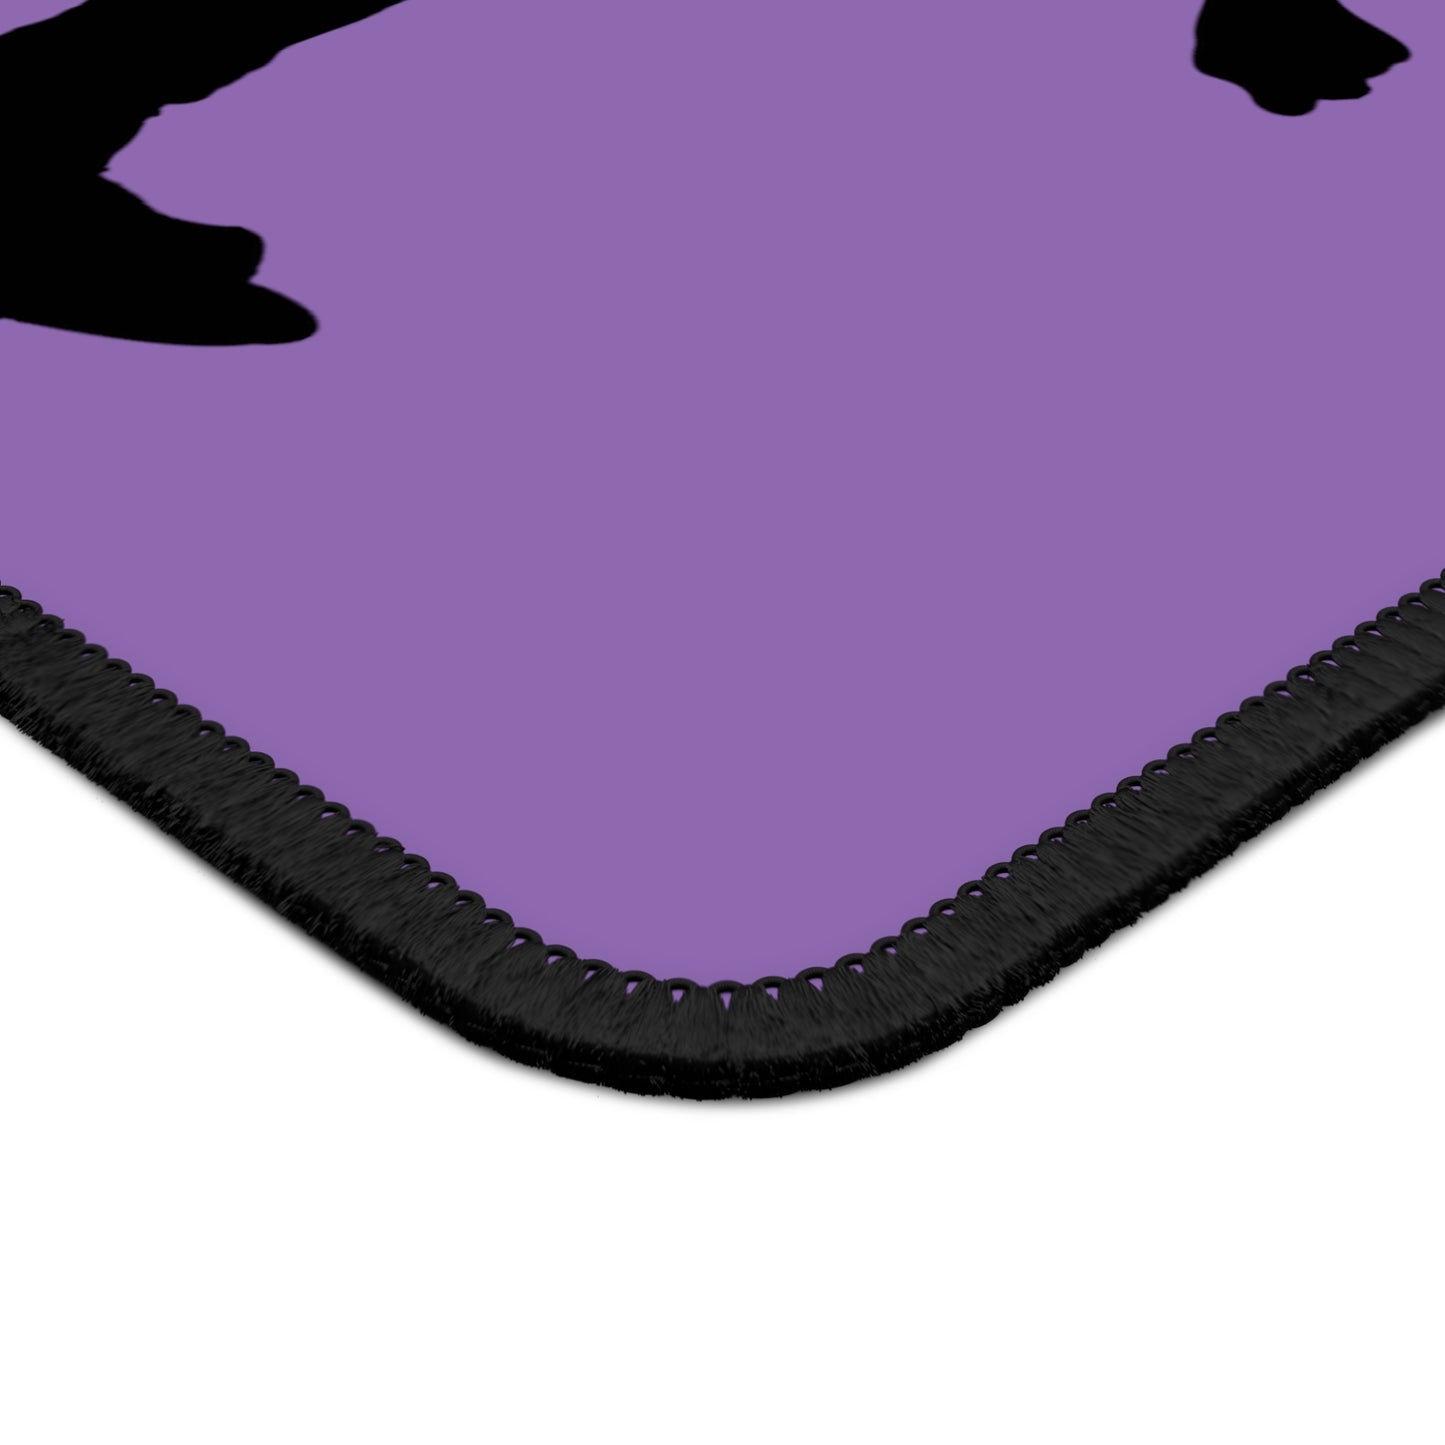 Gaming Mouse Pad: Skateboarding Lite Purple